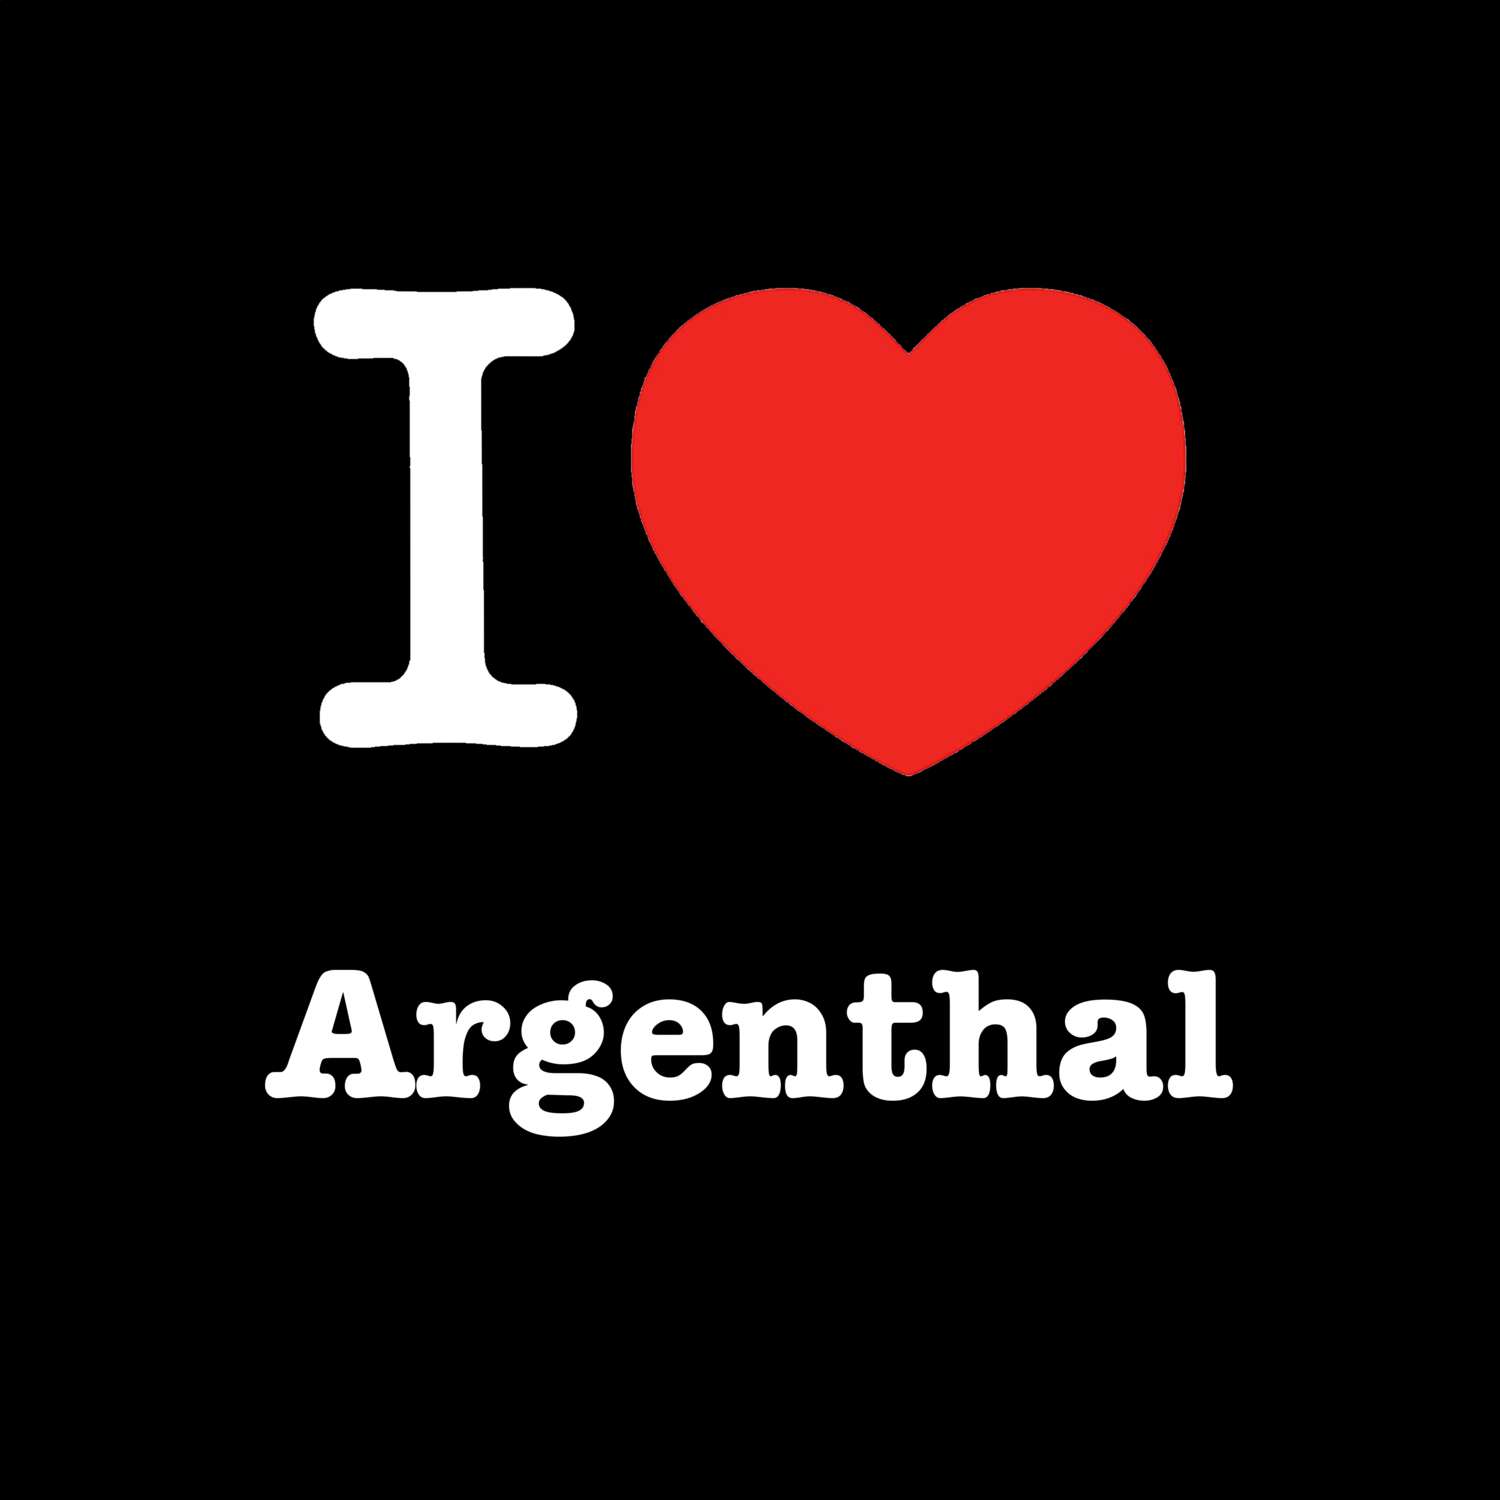 Argenthal T-Shirt »I love«